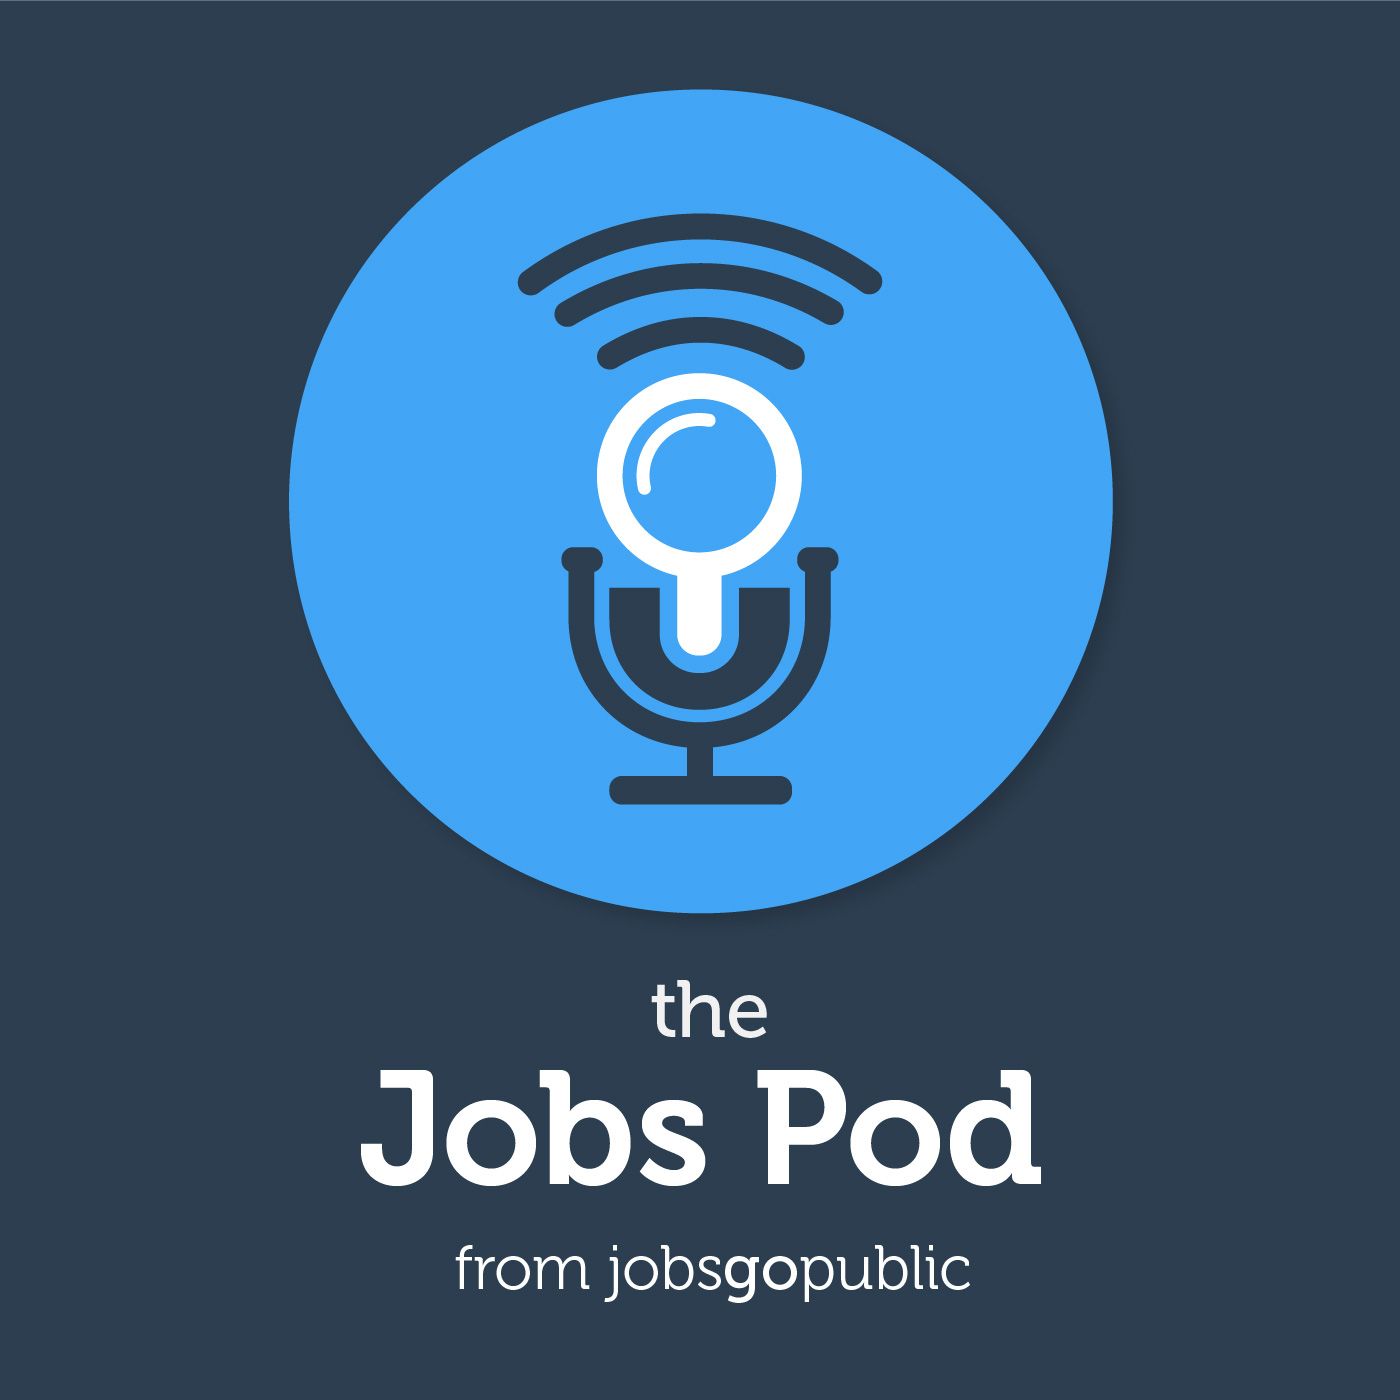 Jobs Pod from Jobsgopublic